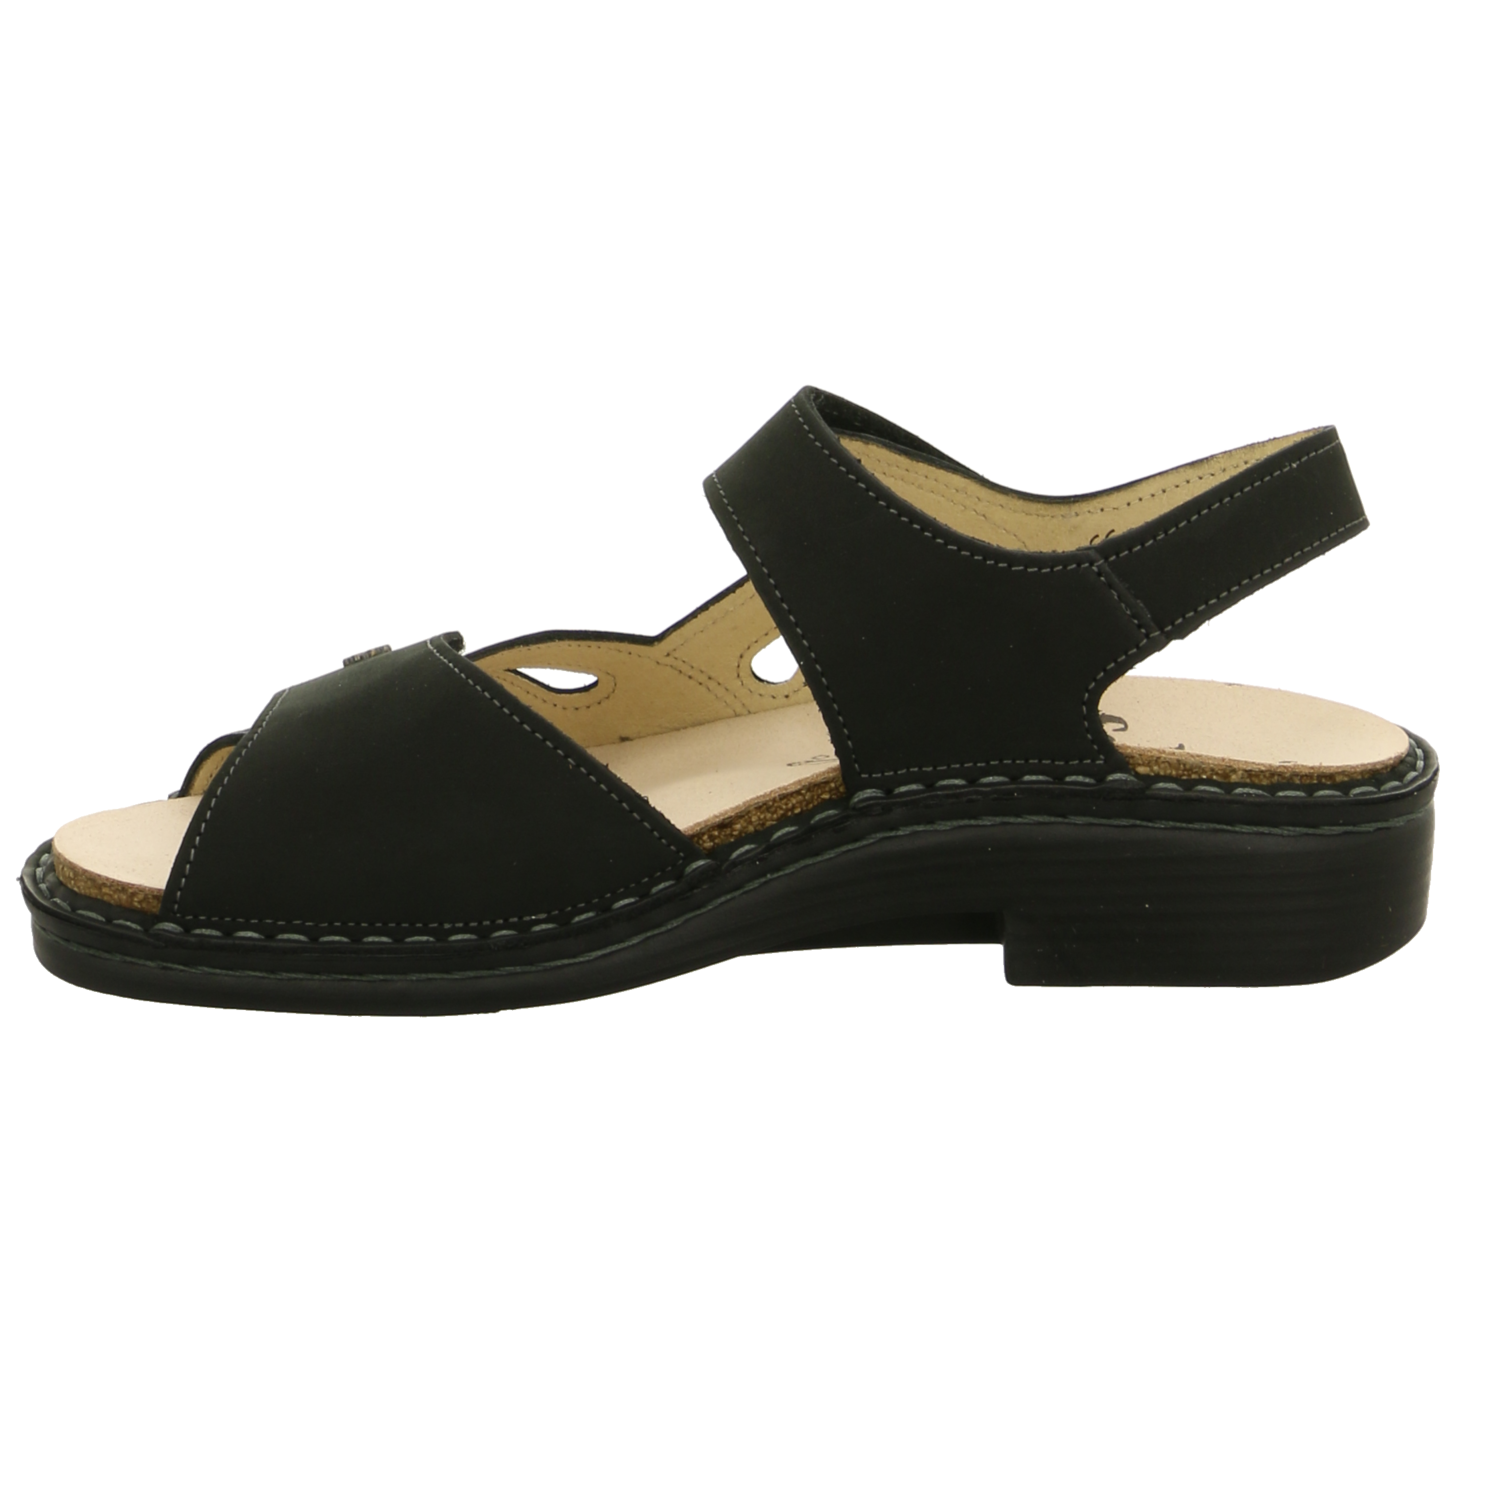 FinnComfort Comfort-Sandalette schwarz